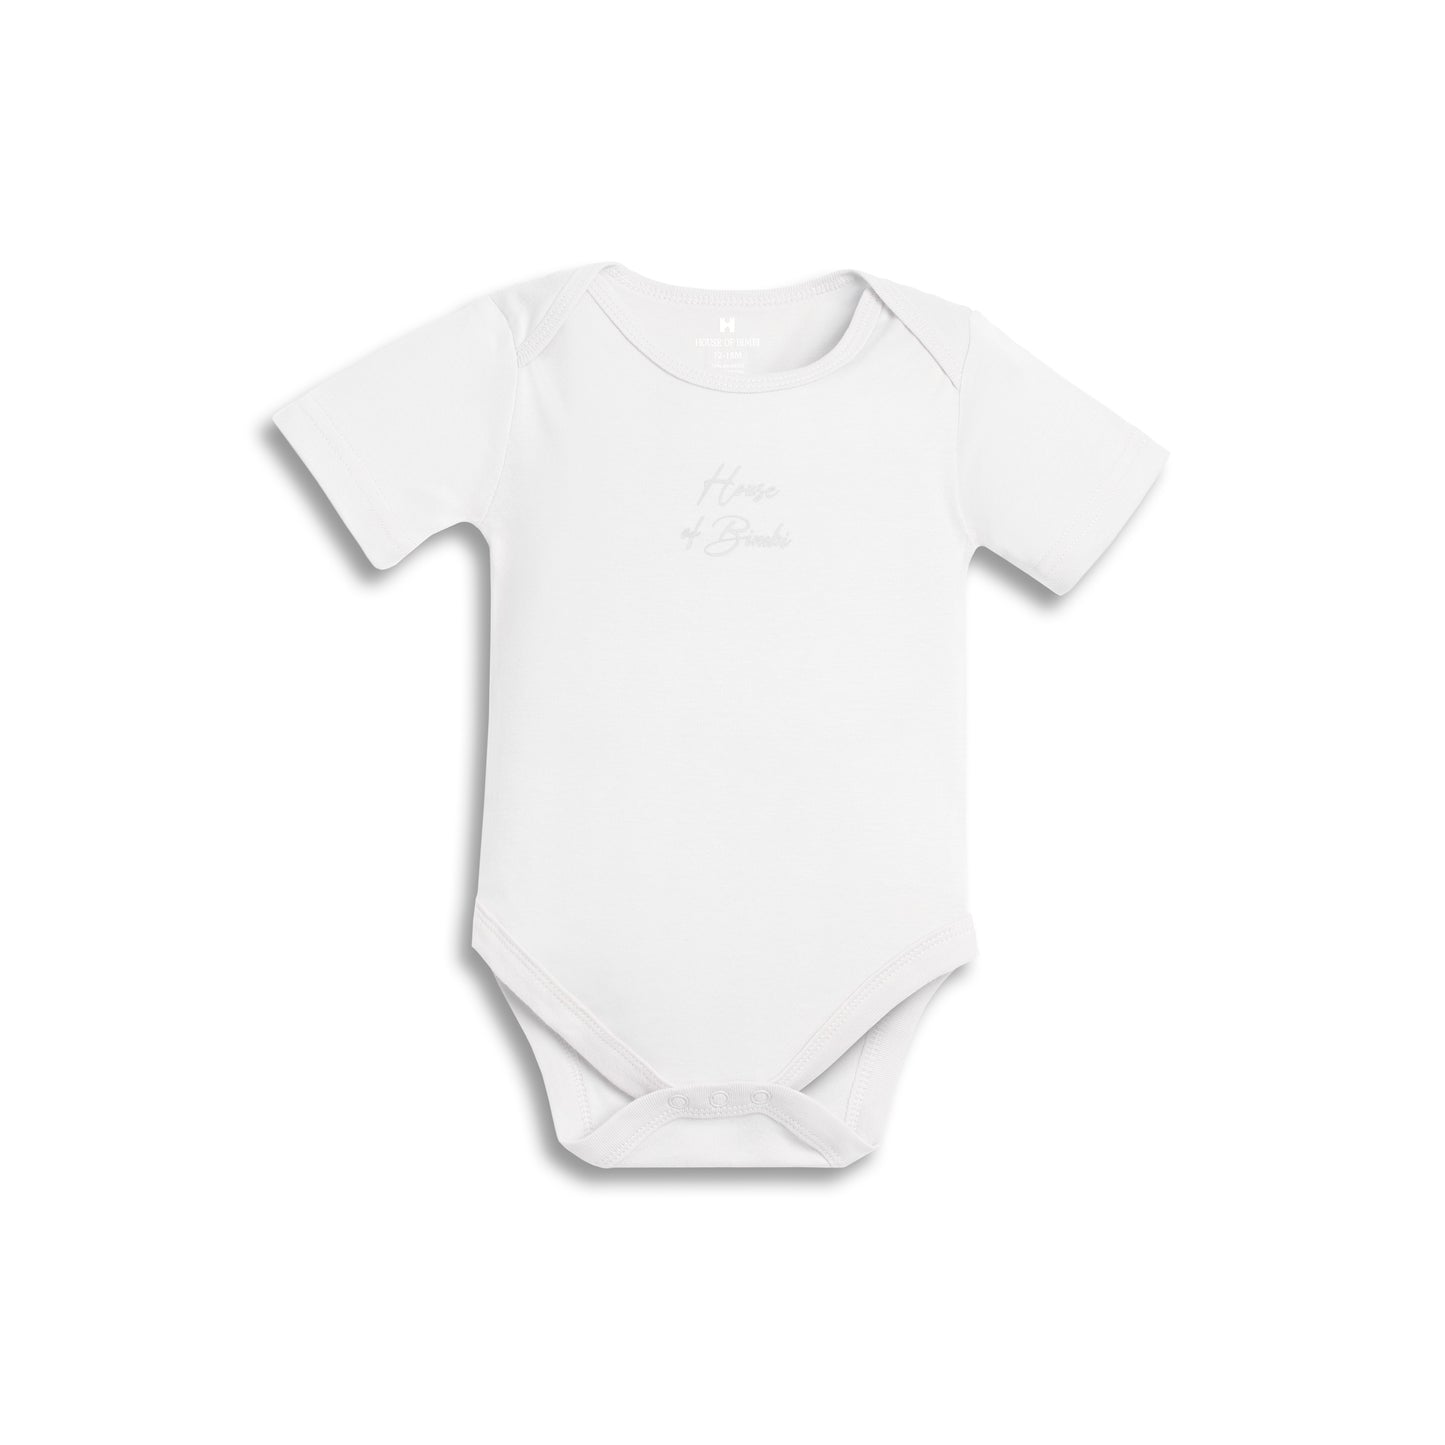 Essentials Newborn Gift Box - White